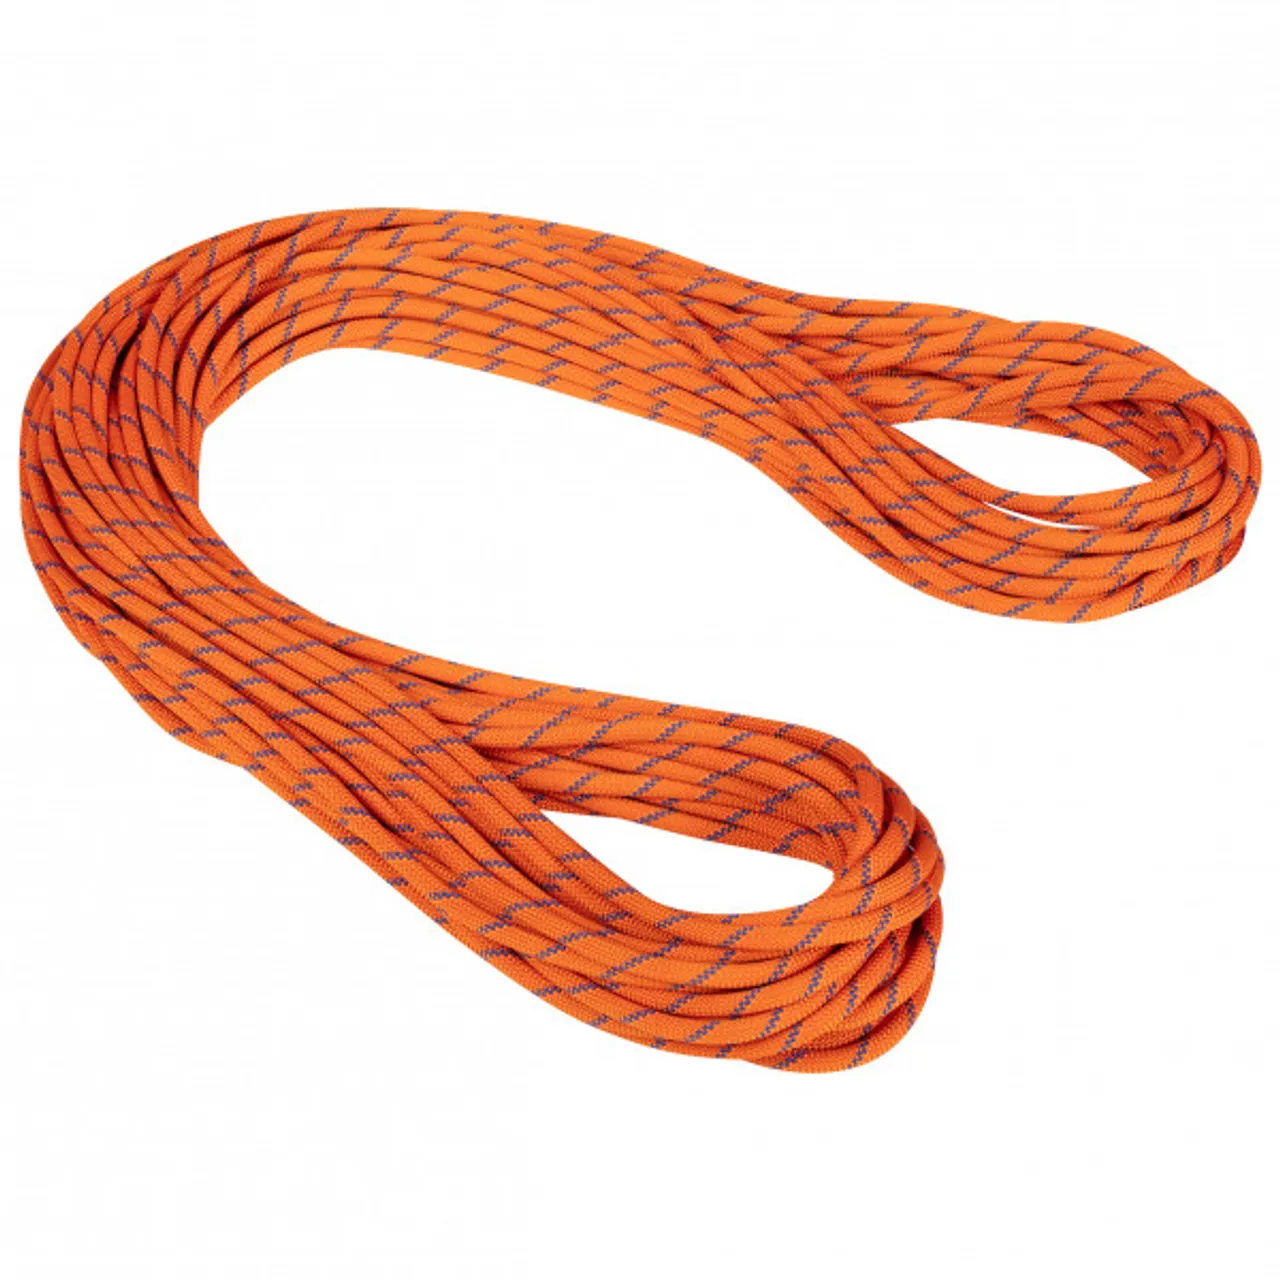 Mammut - 9.0 Alpine Sender Dry Rope - Single rope size 50 m, orange